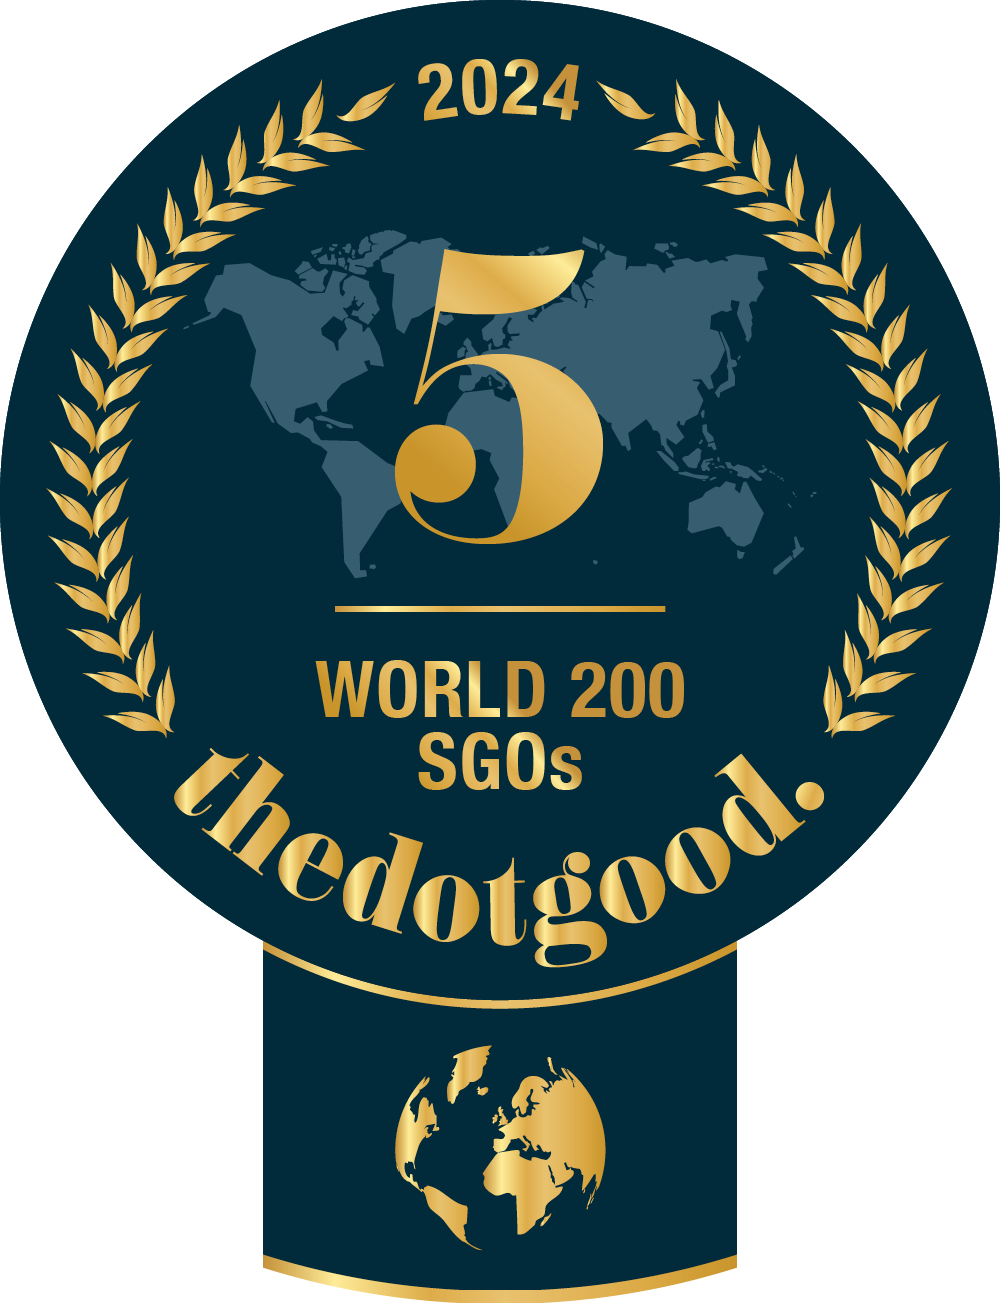 JA WORLDWIDE is world ranked on thedotgood.